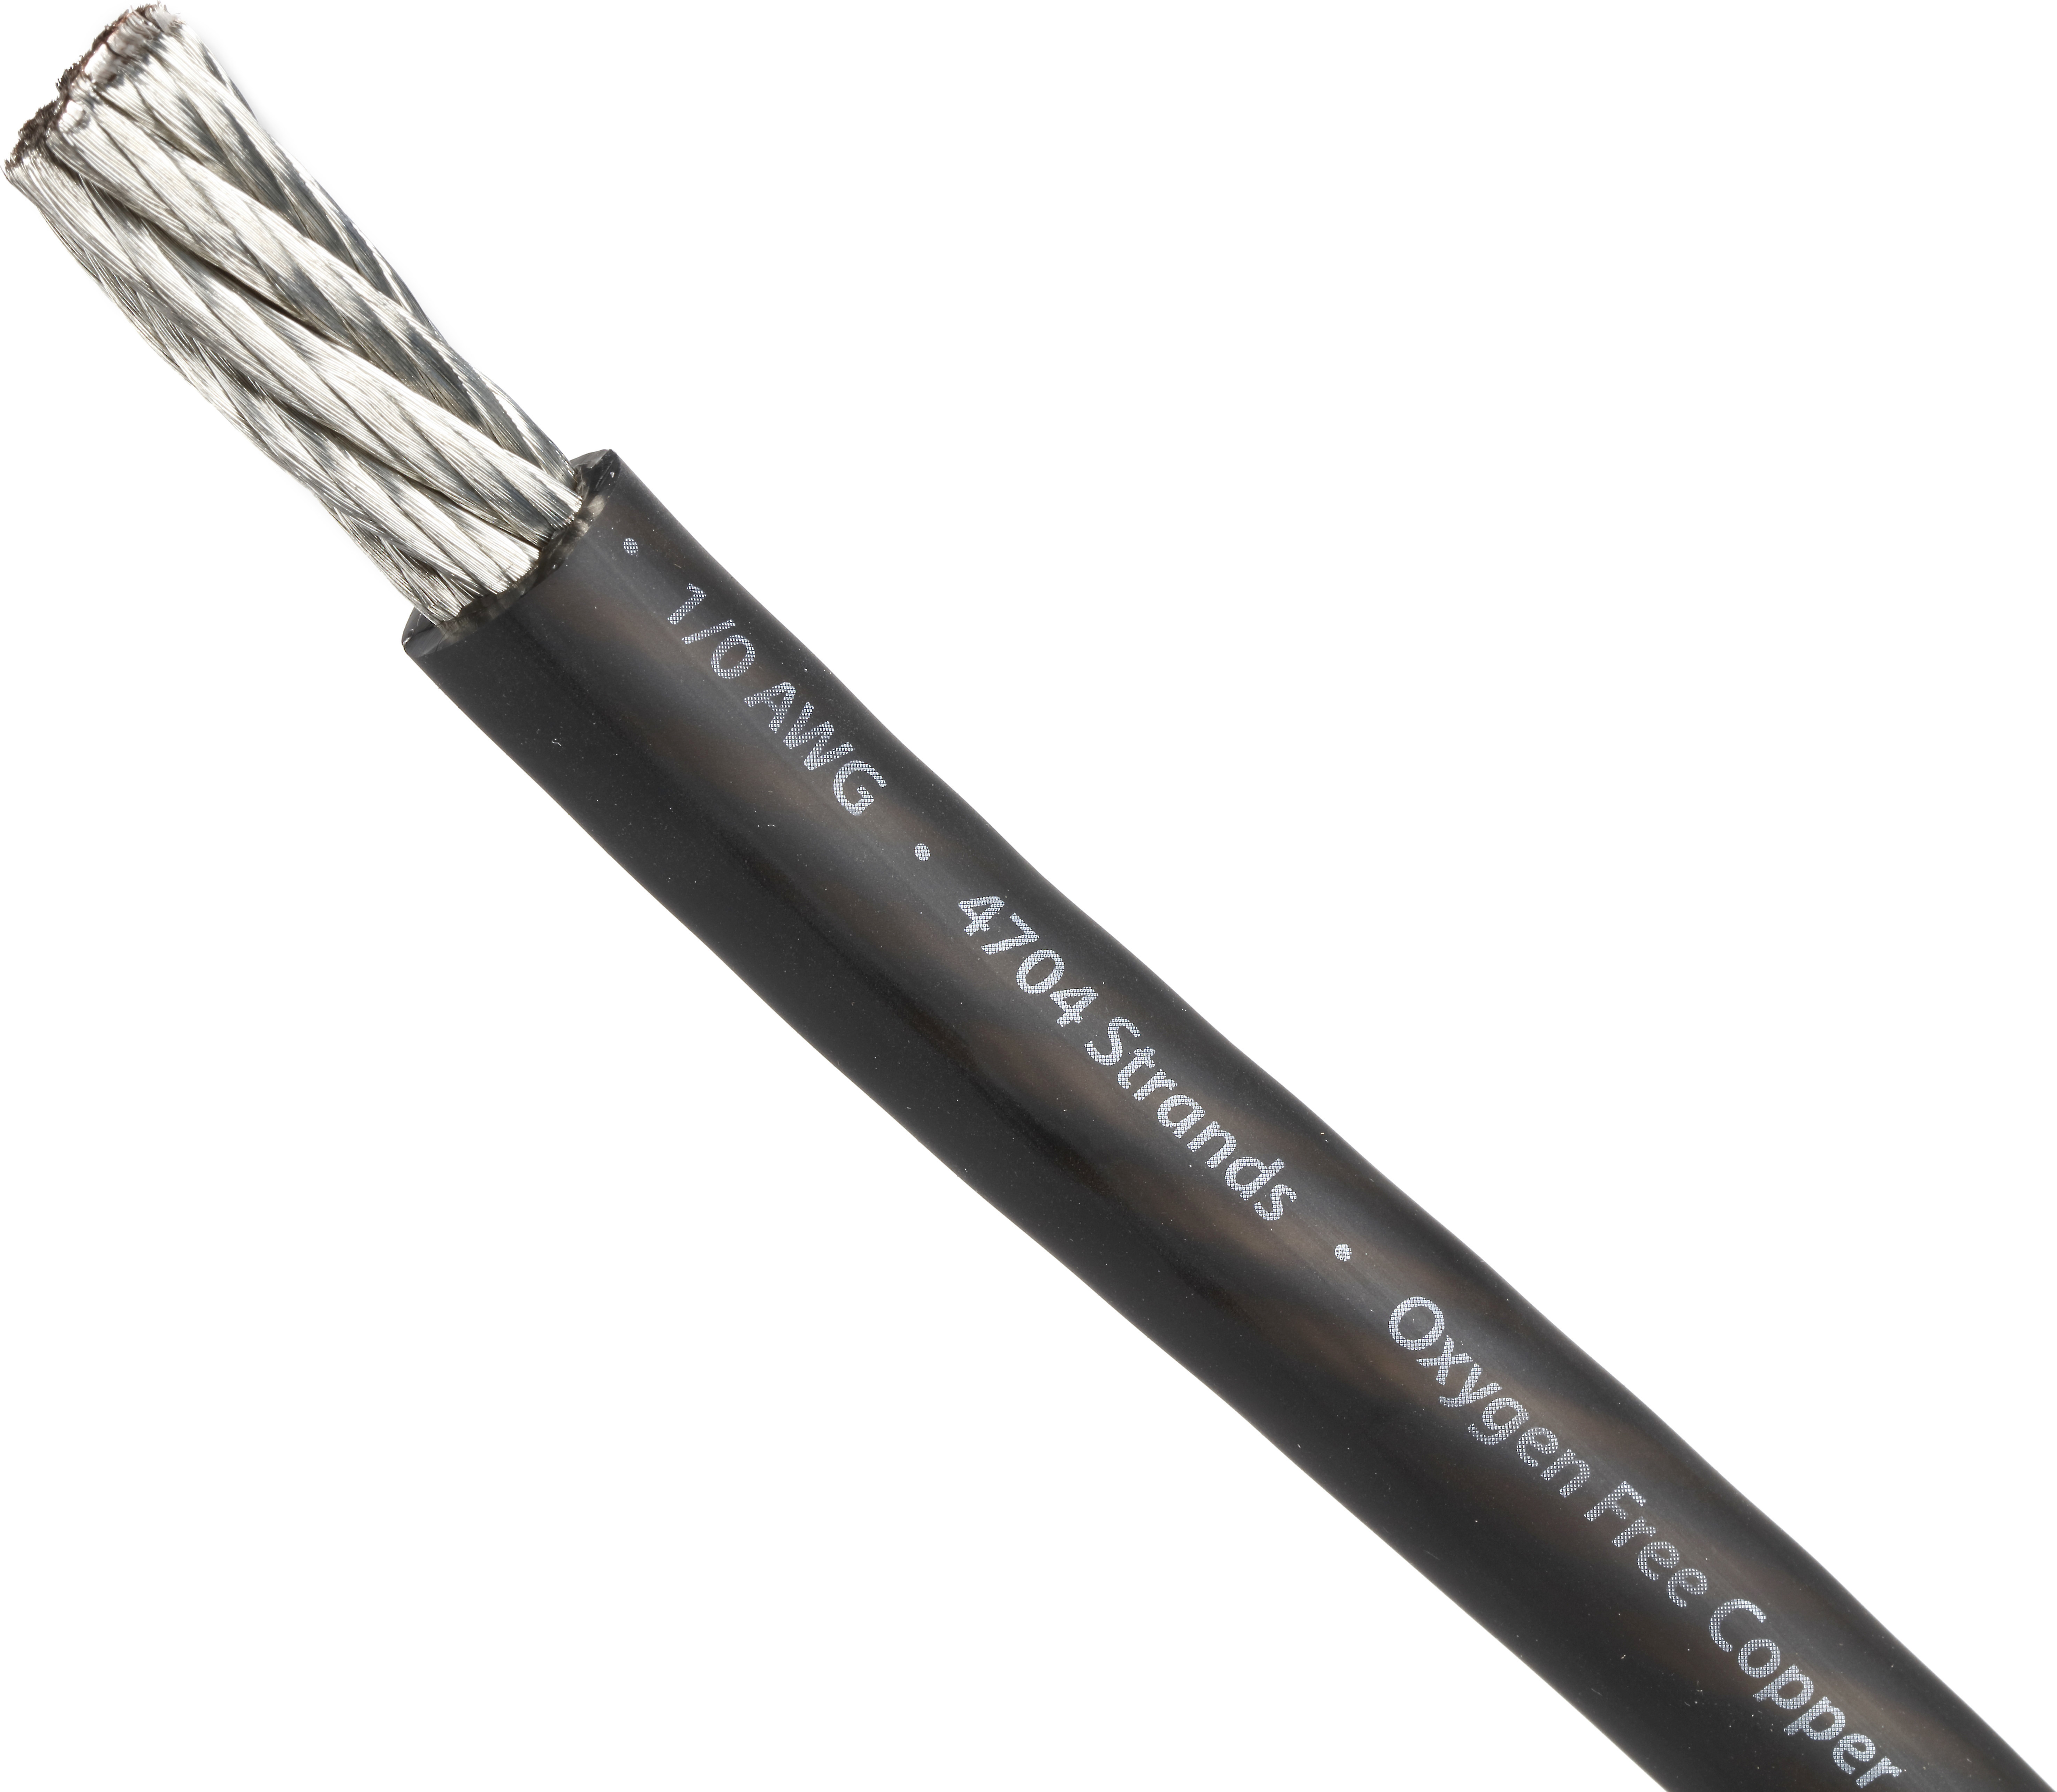 4 Gauge 18 feet Black Power OFC Wire Strands Copper Hi-Voltage Marine Cable USA